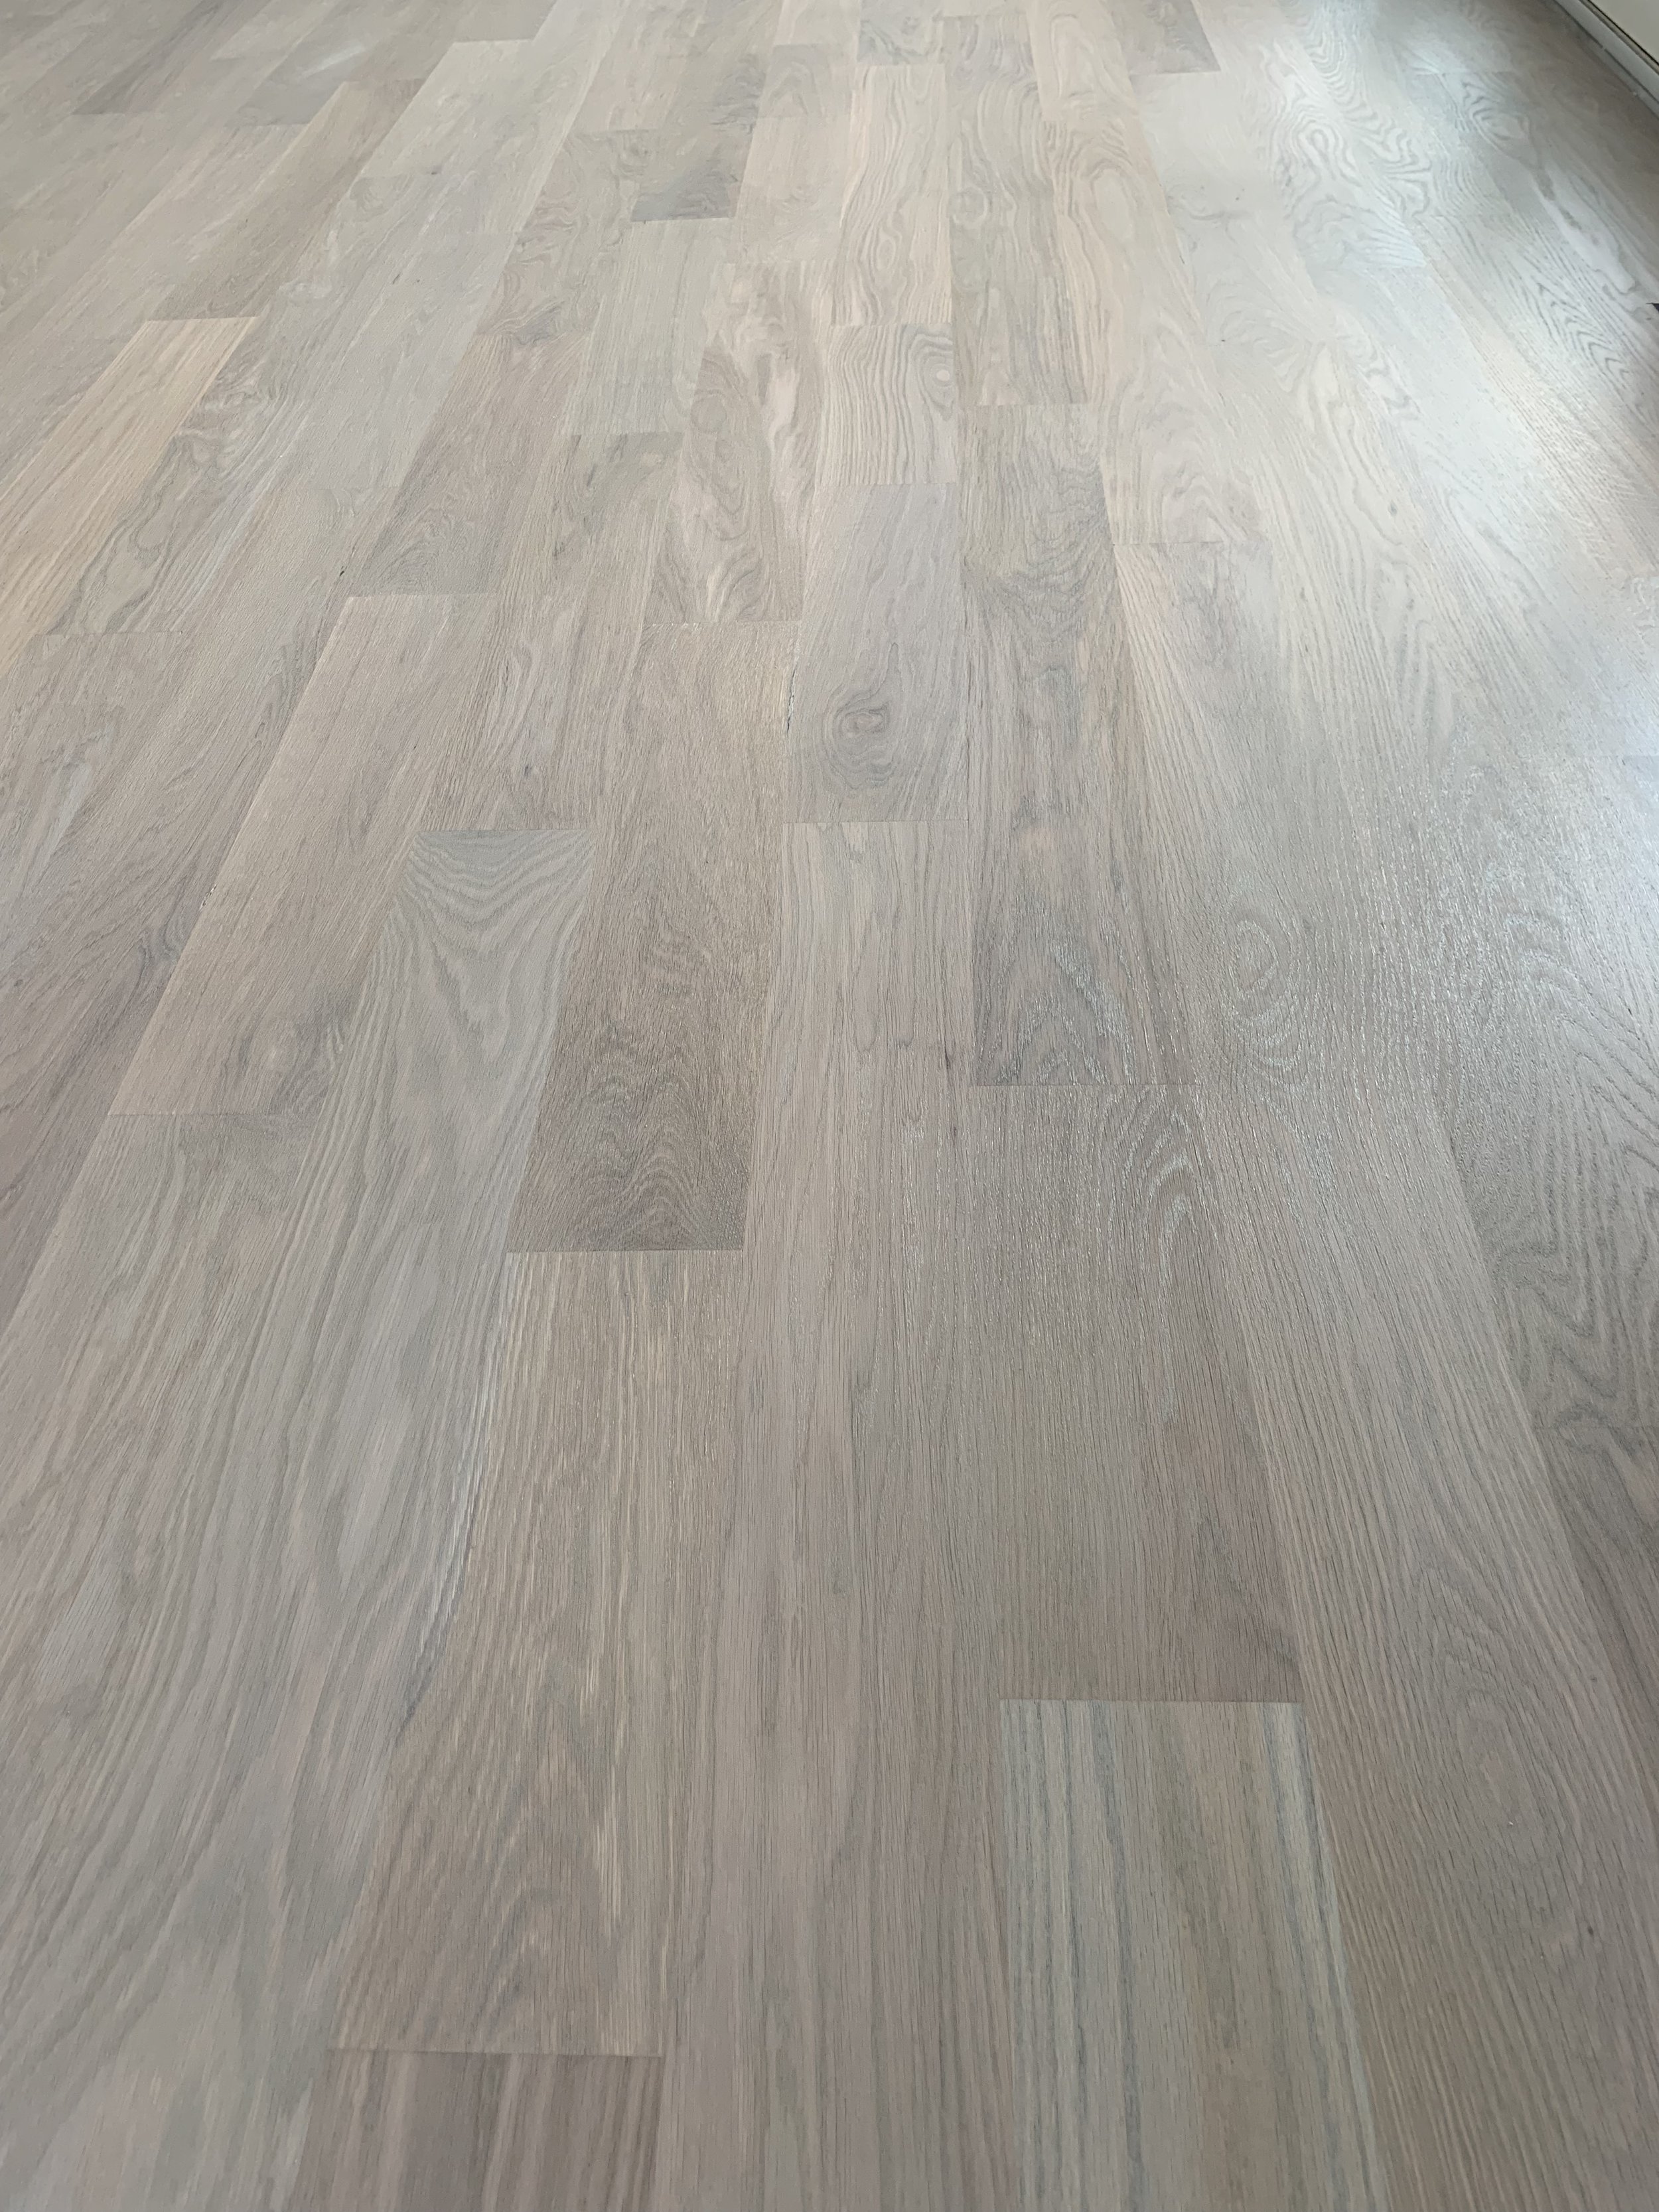 Gray Hardwood Floors